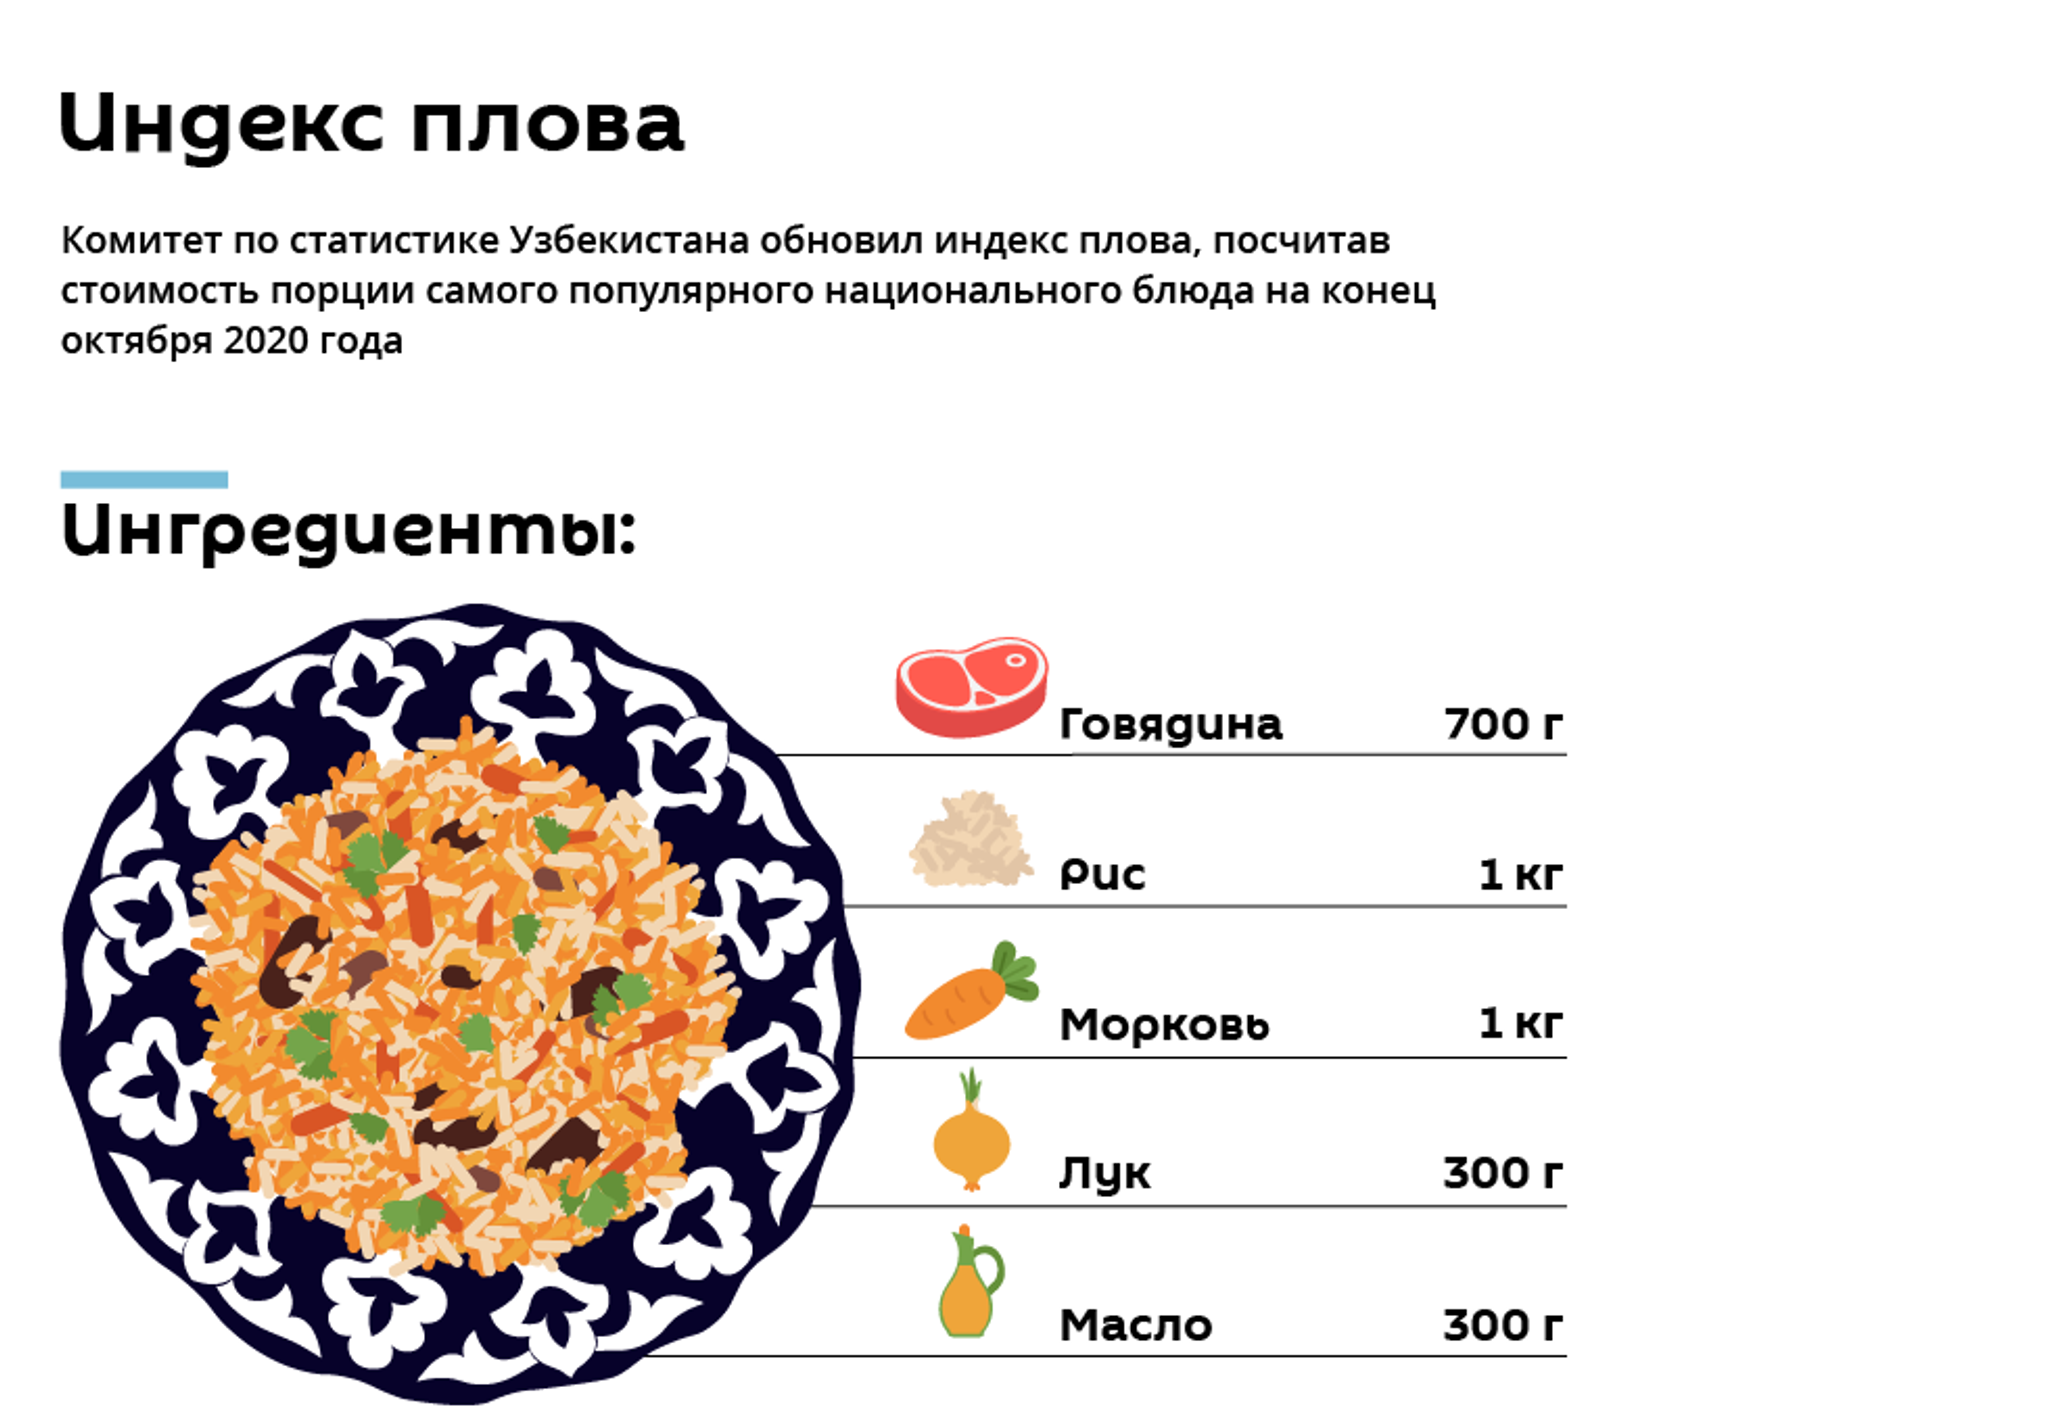 Плов порция в граммах. Себестоимость 1 кг плова. Индекс плова в Узбекистане. Порция плова на 1 человека.